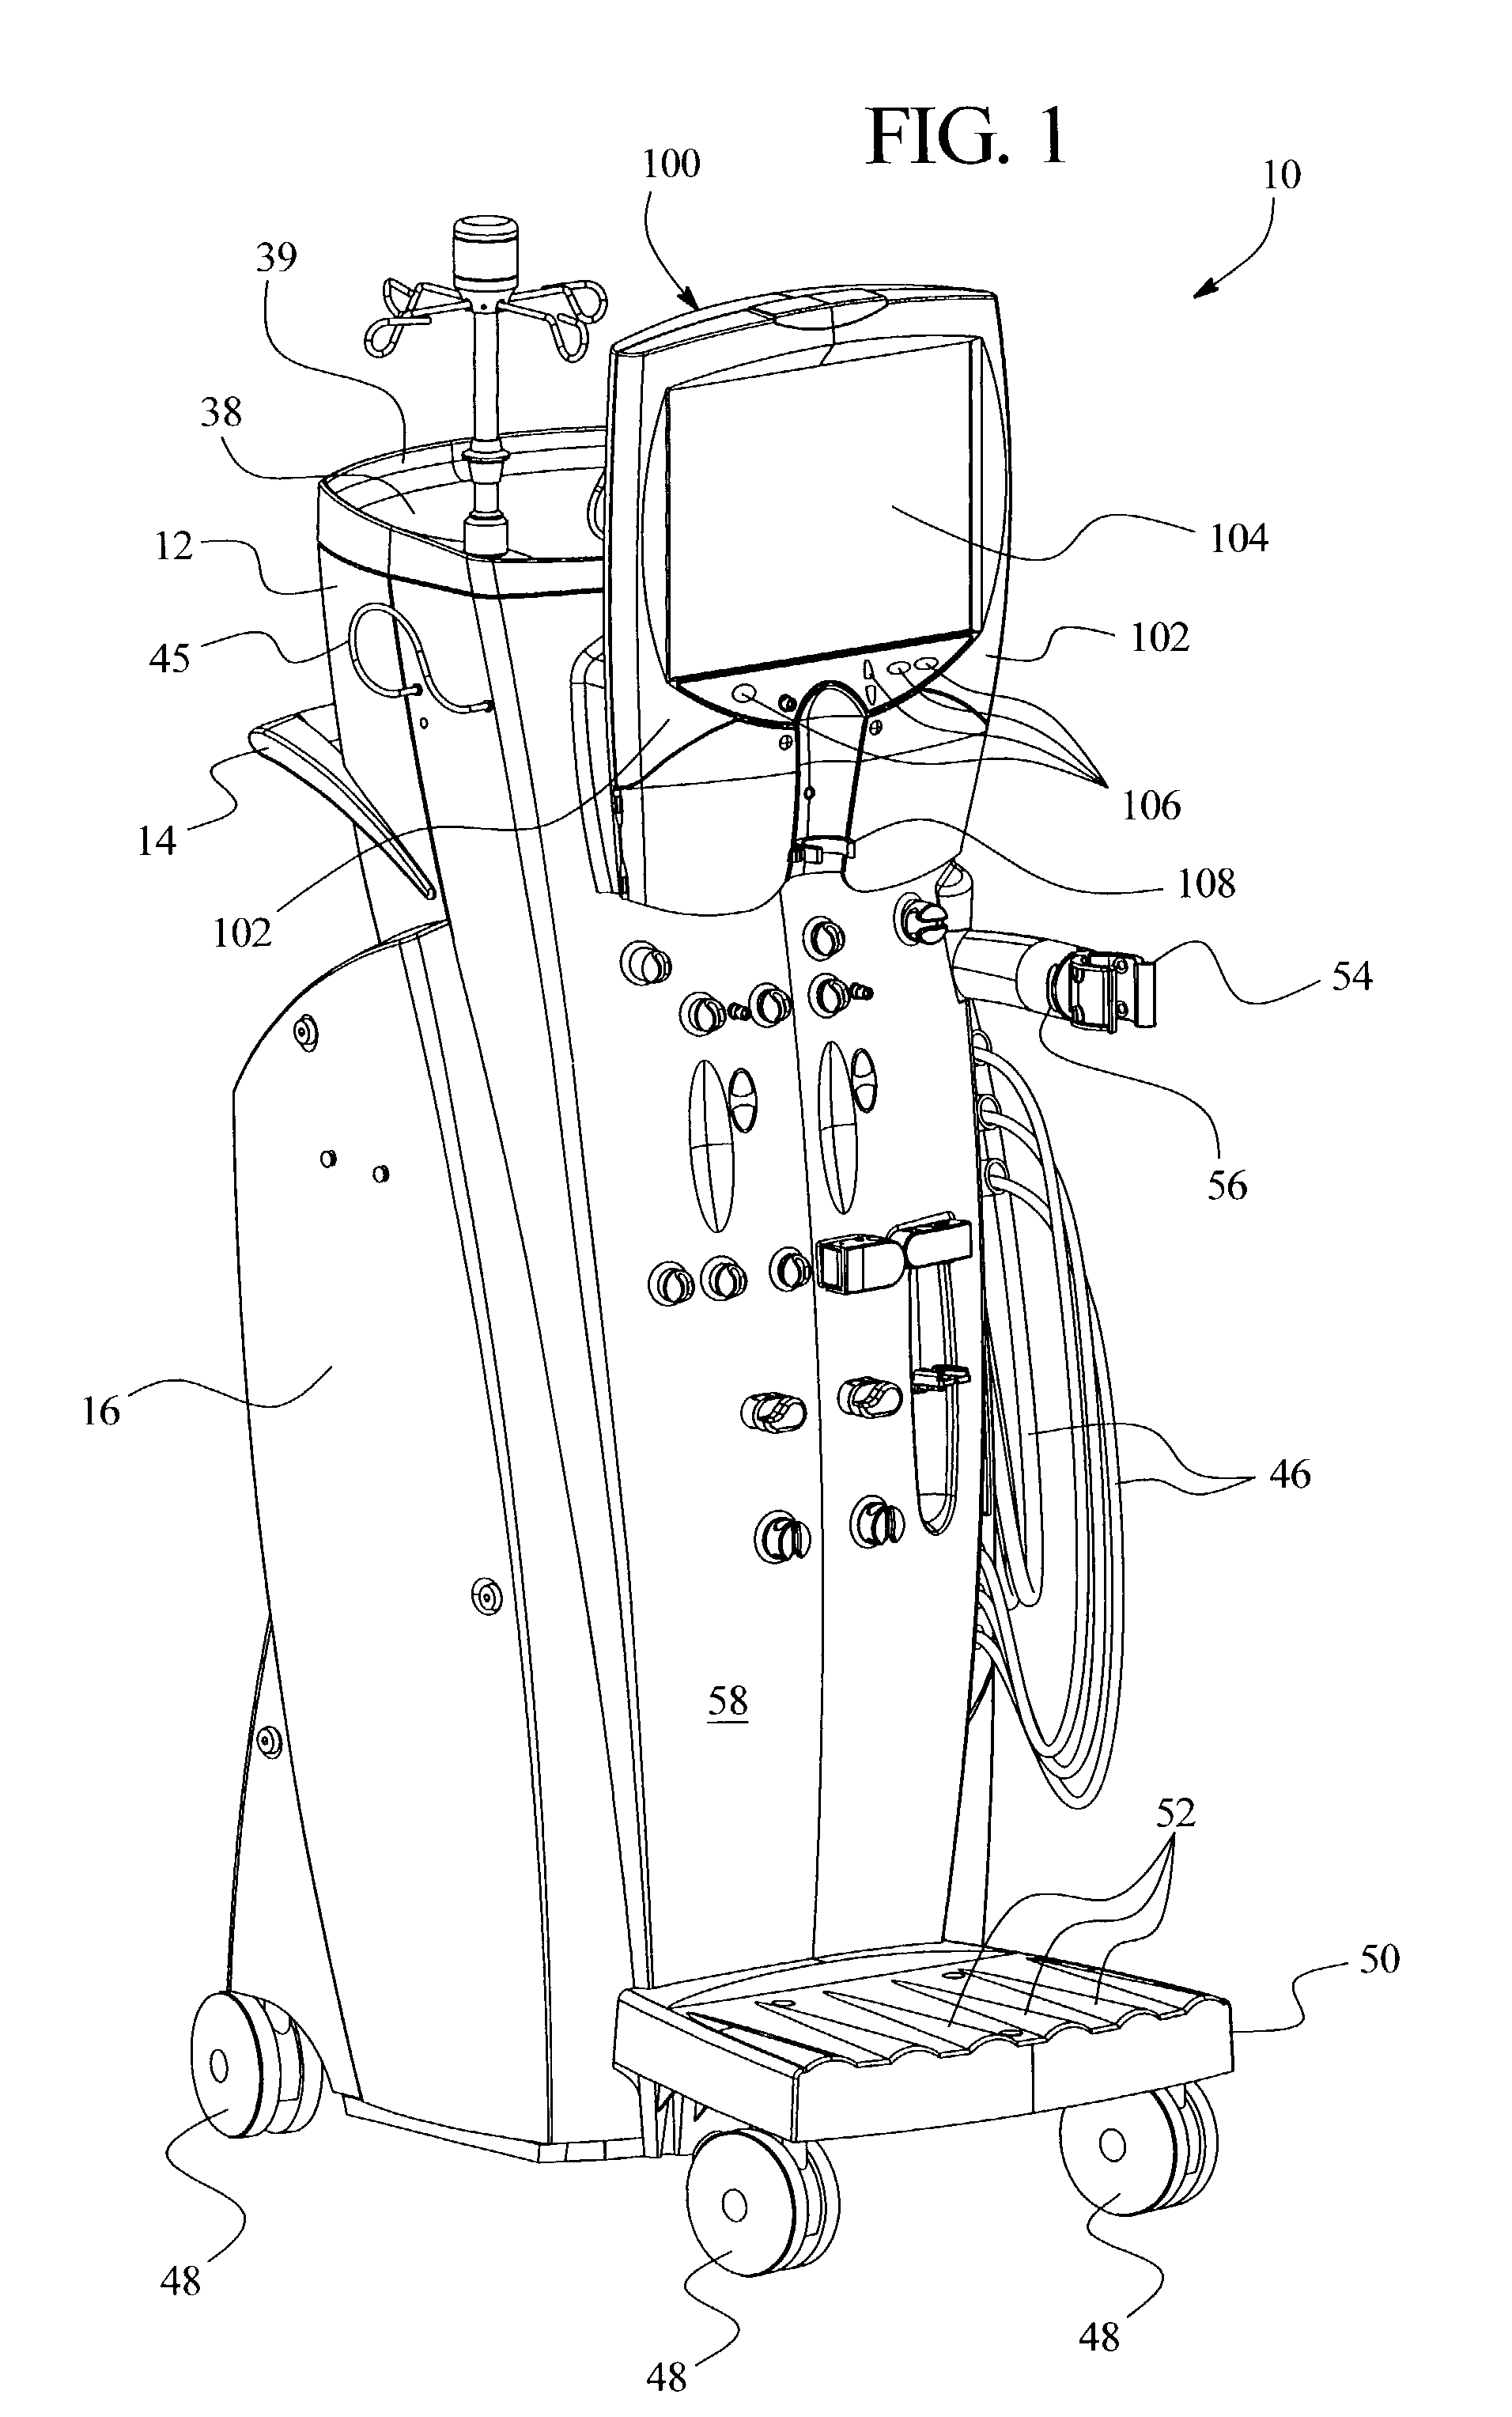 Dialysis machine having combination display and handle